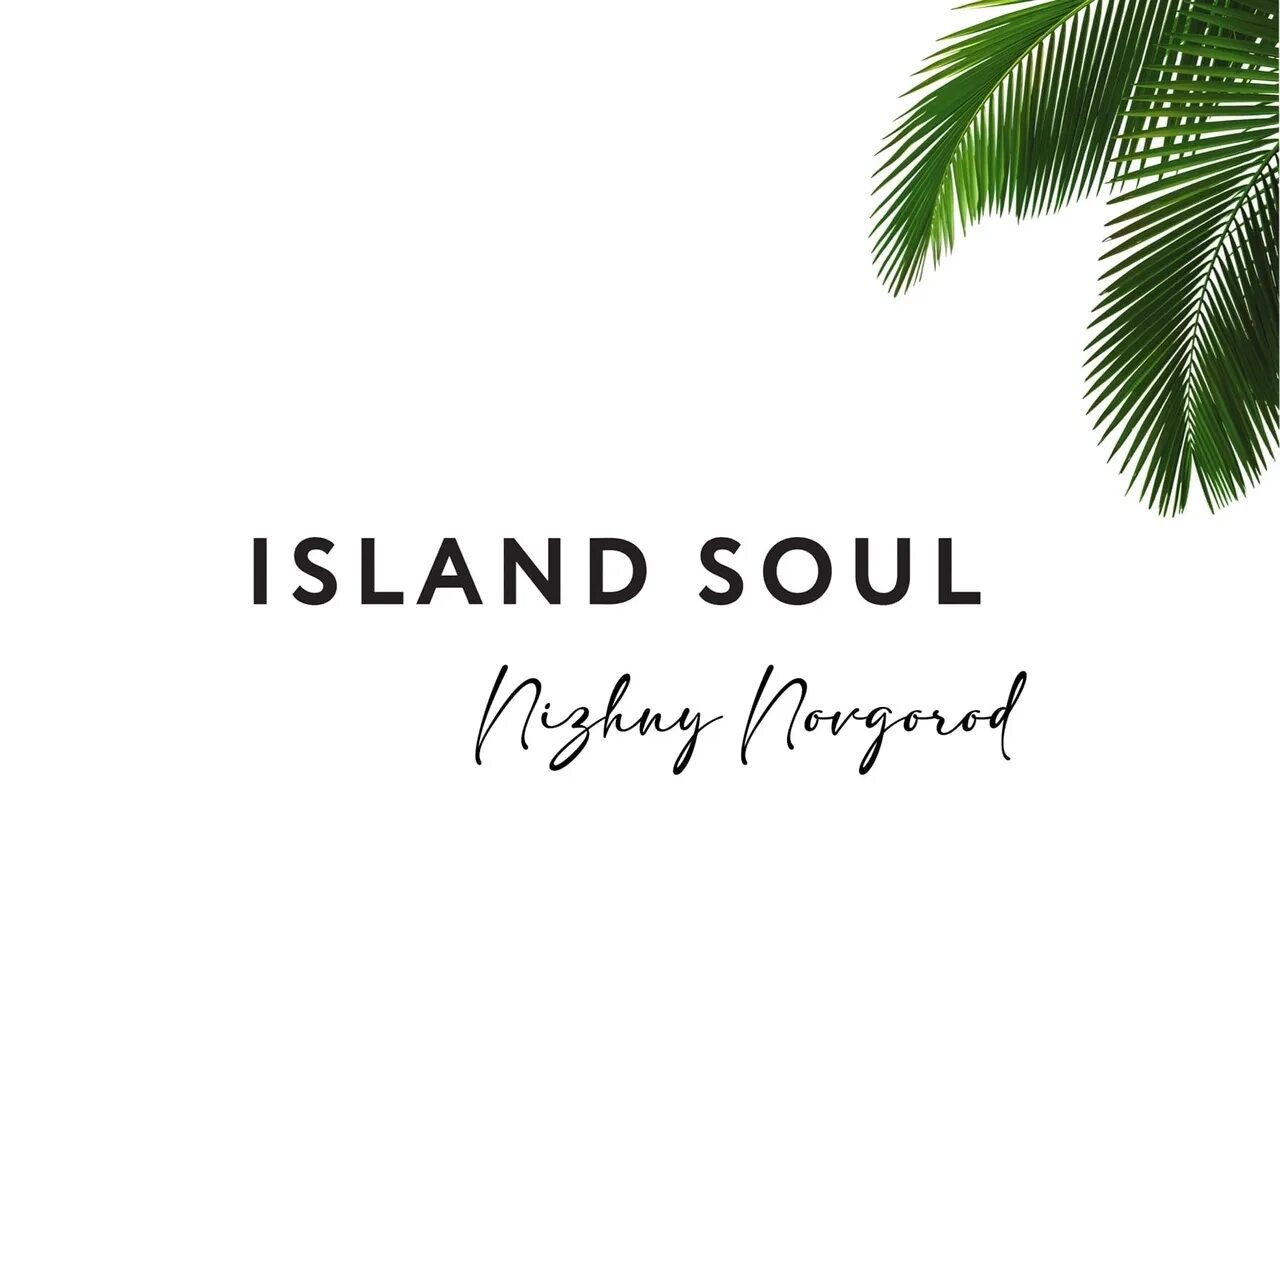 Айленд соул. Island Soul упаковка. Серебро Island Soul. Логотип Исланд соул. Island soul интернет магазин